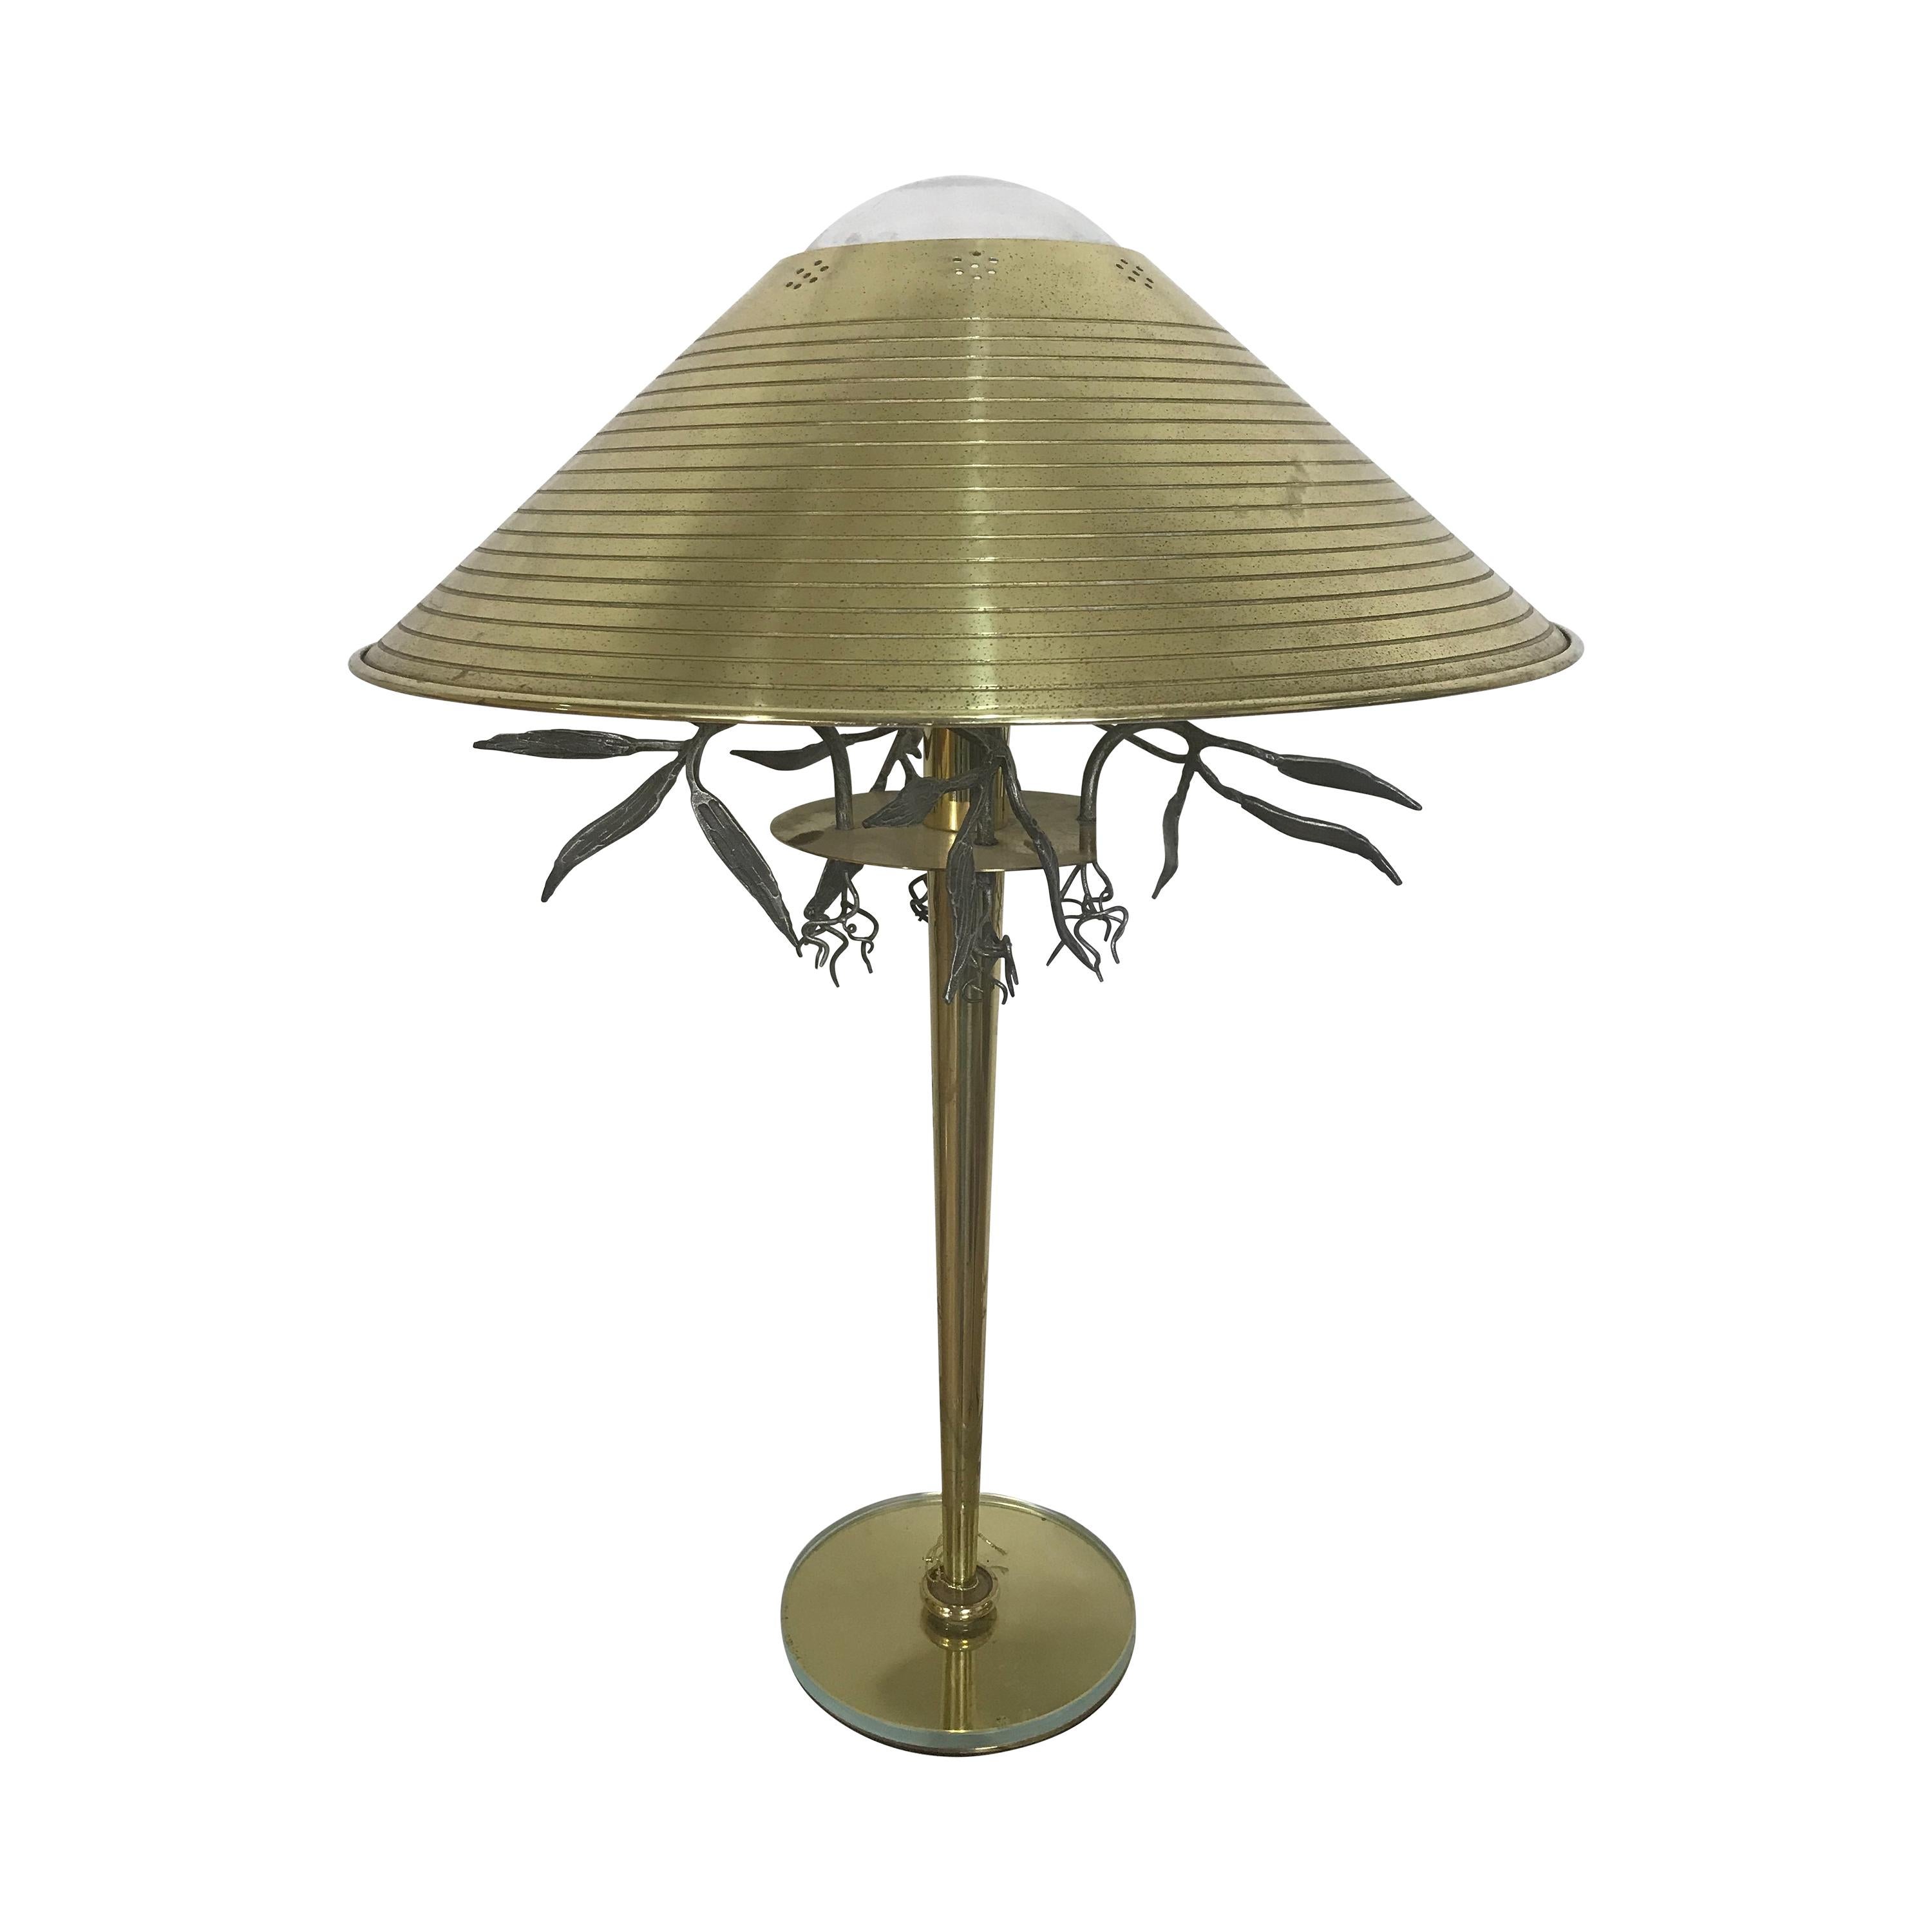 Amazing, Banci Table Lamp. Italy 1980